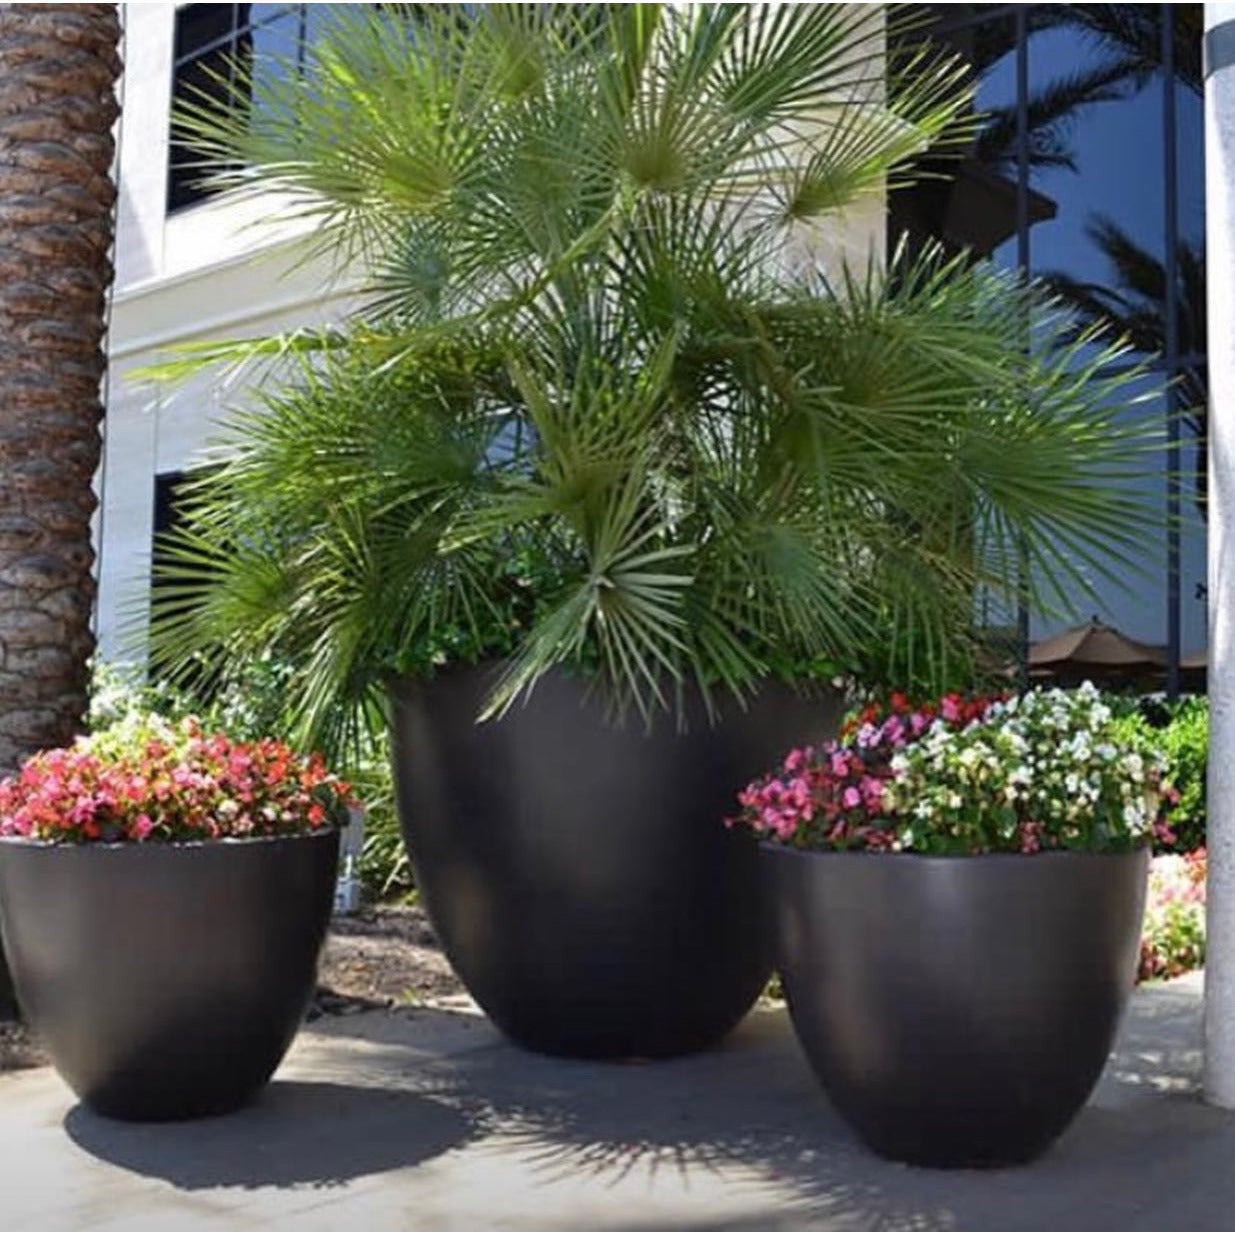 Big flower pots - big plants! - Greenspired